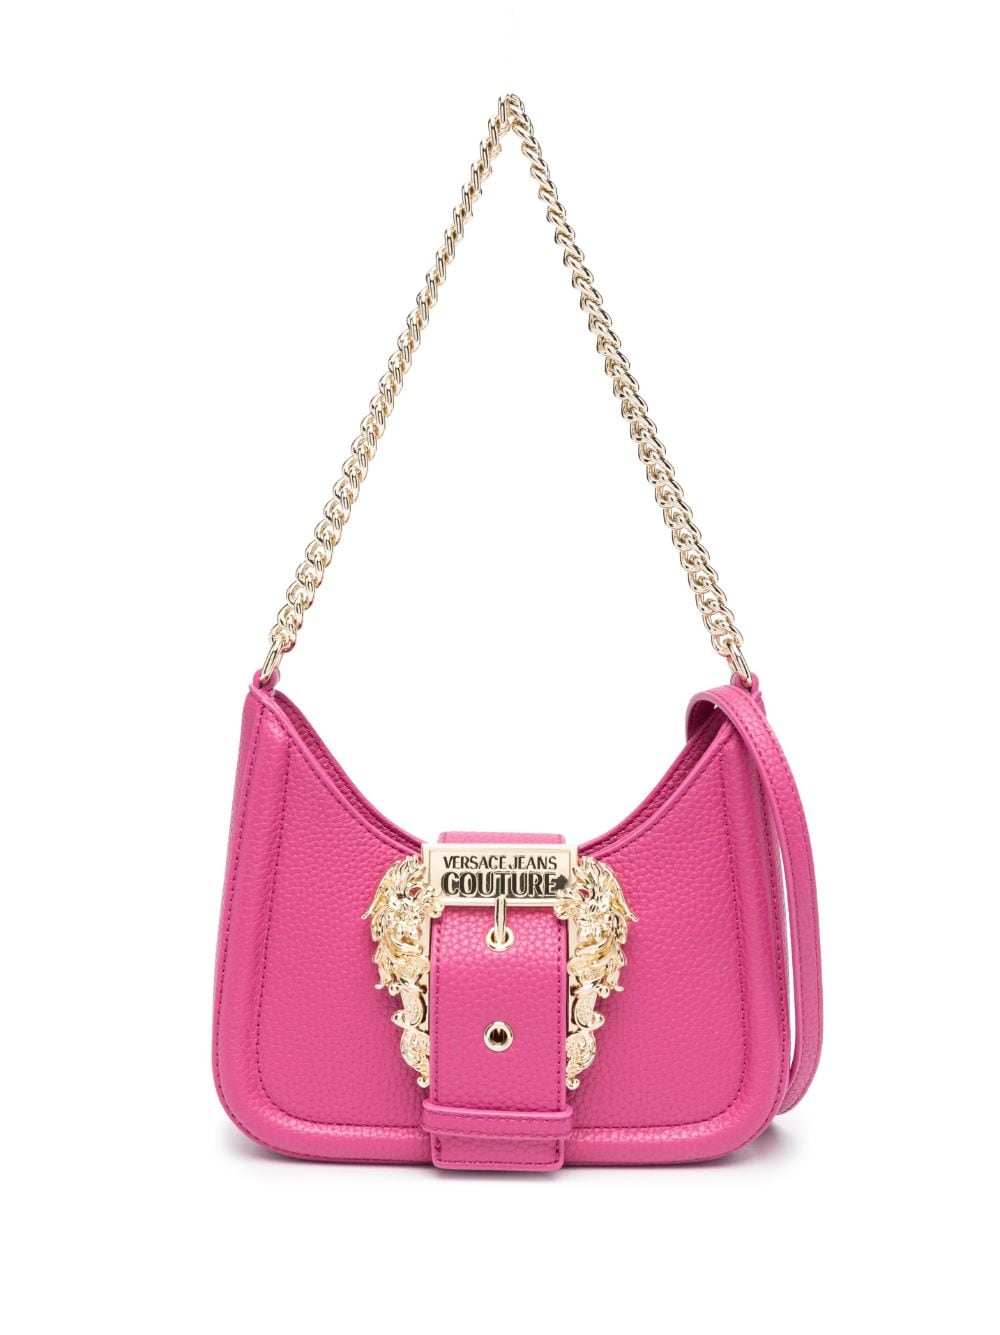 Versace Jeans Couture Couture shoulder bag - Pink von Versace Jeans Couture